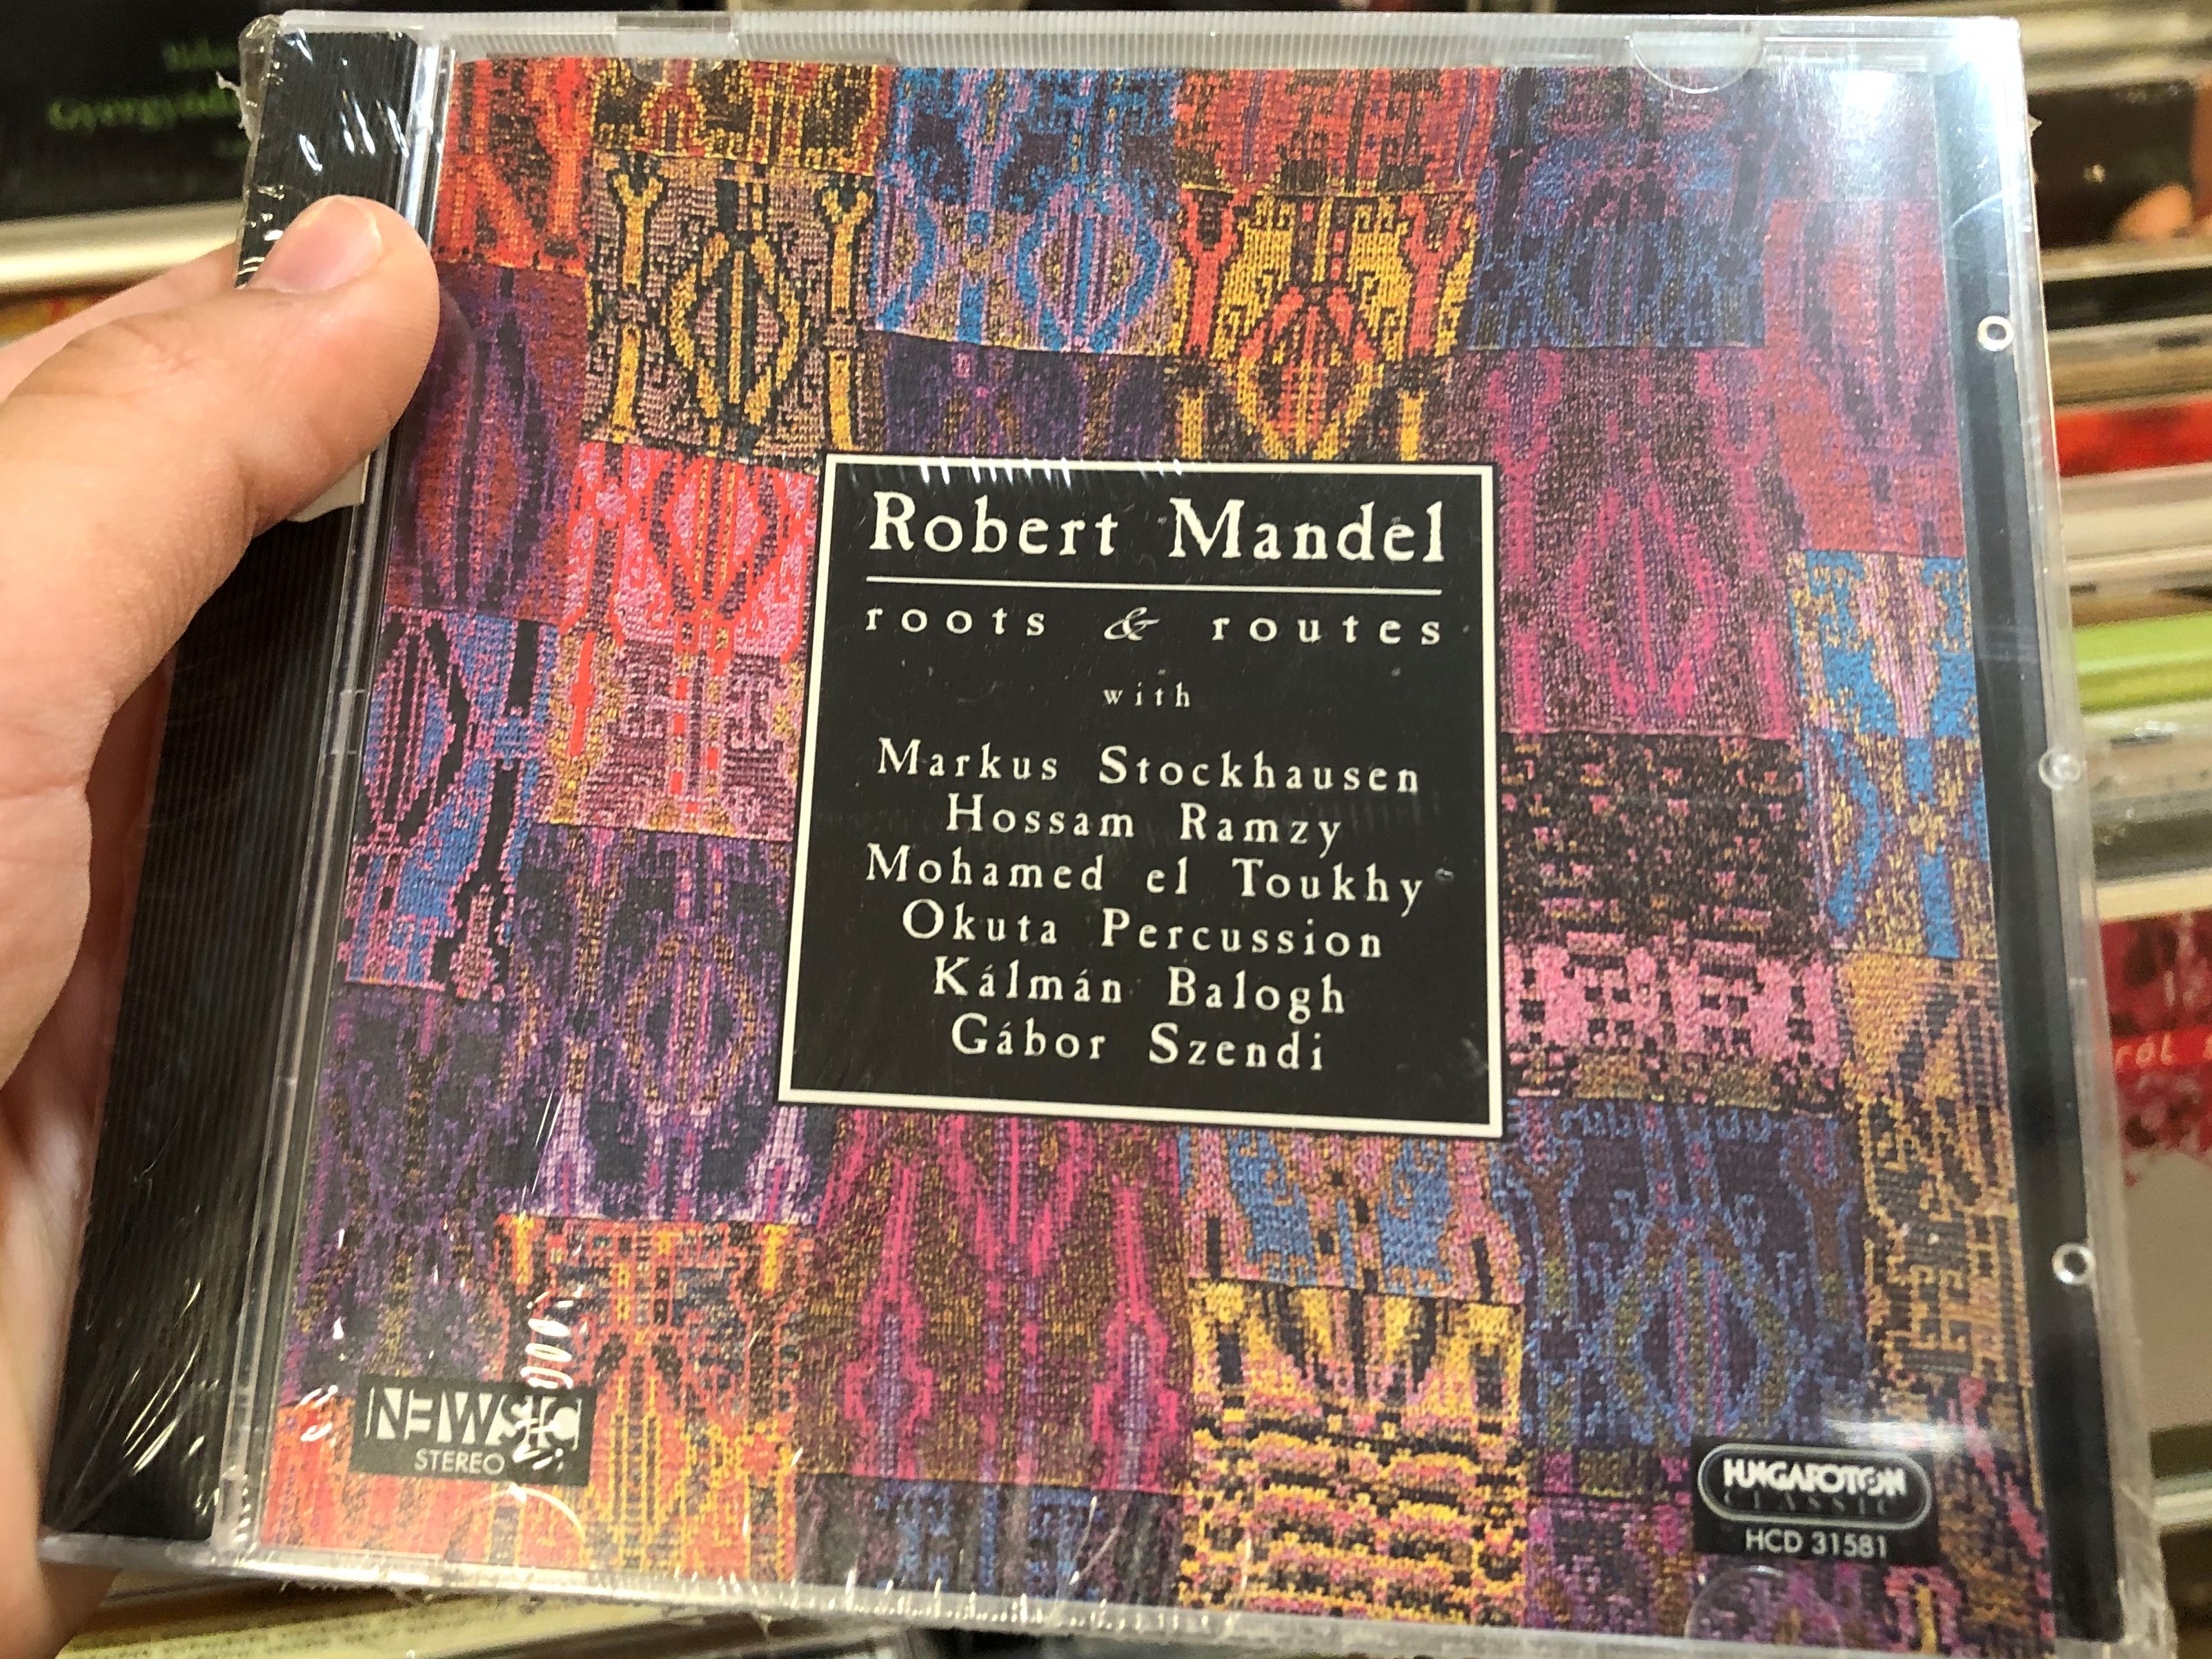 robert-mandel-roots-routes-hungaroton-classic-audio-cd-stereo-hcd-31581-1-.jpg